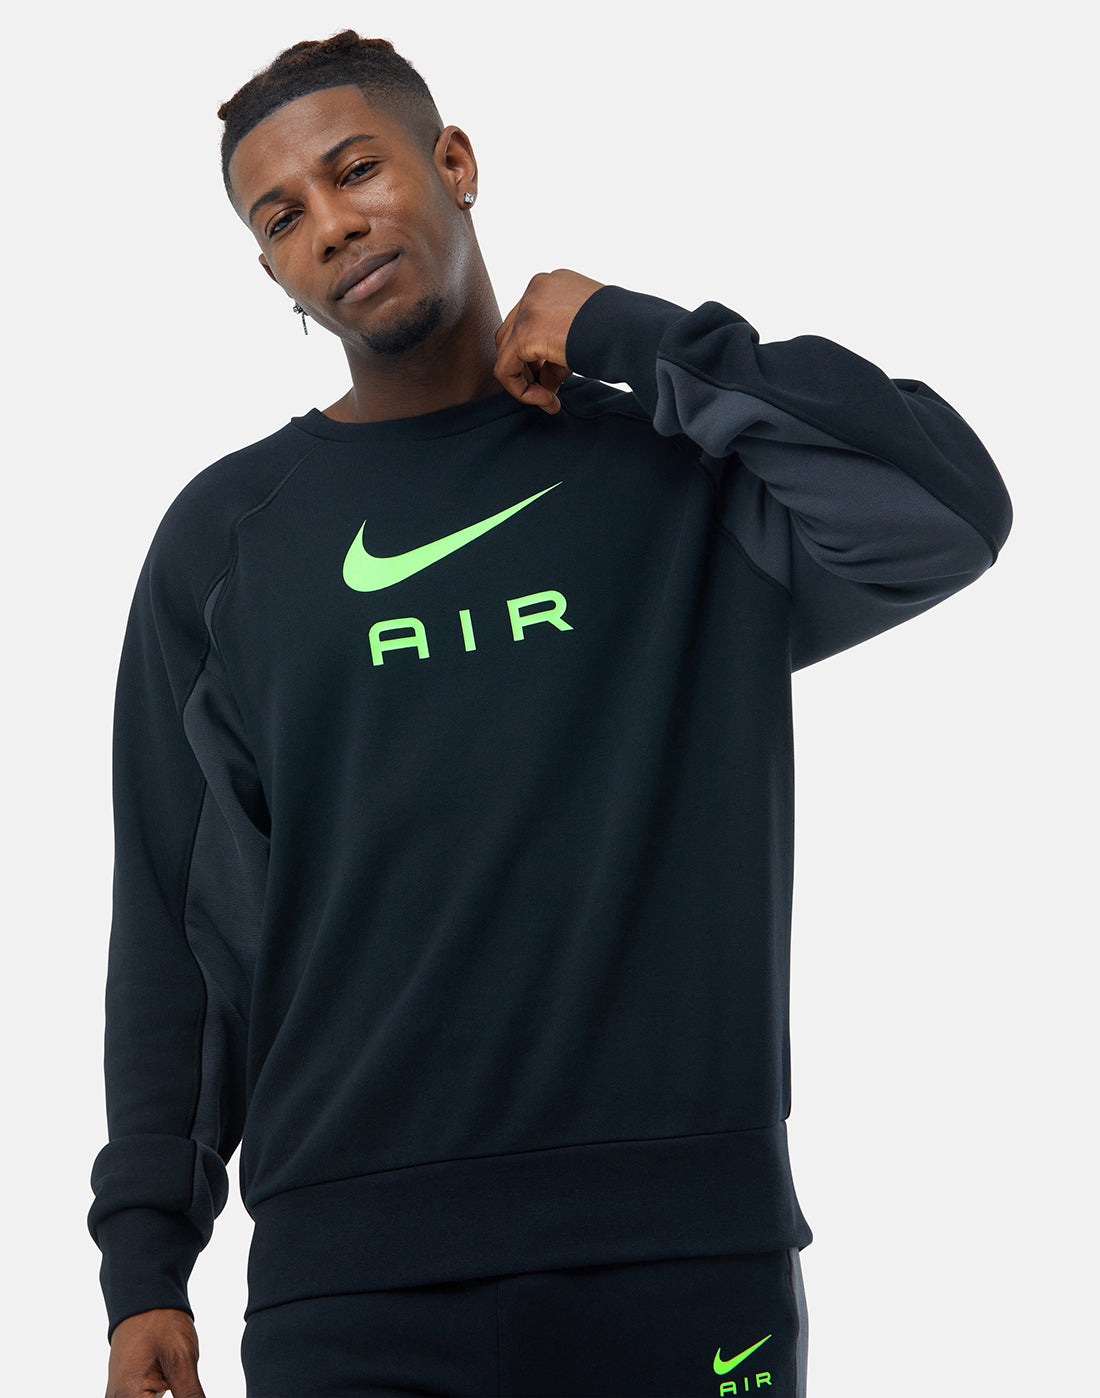 Nike Air Sweatshirt - Black/Green